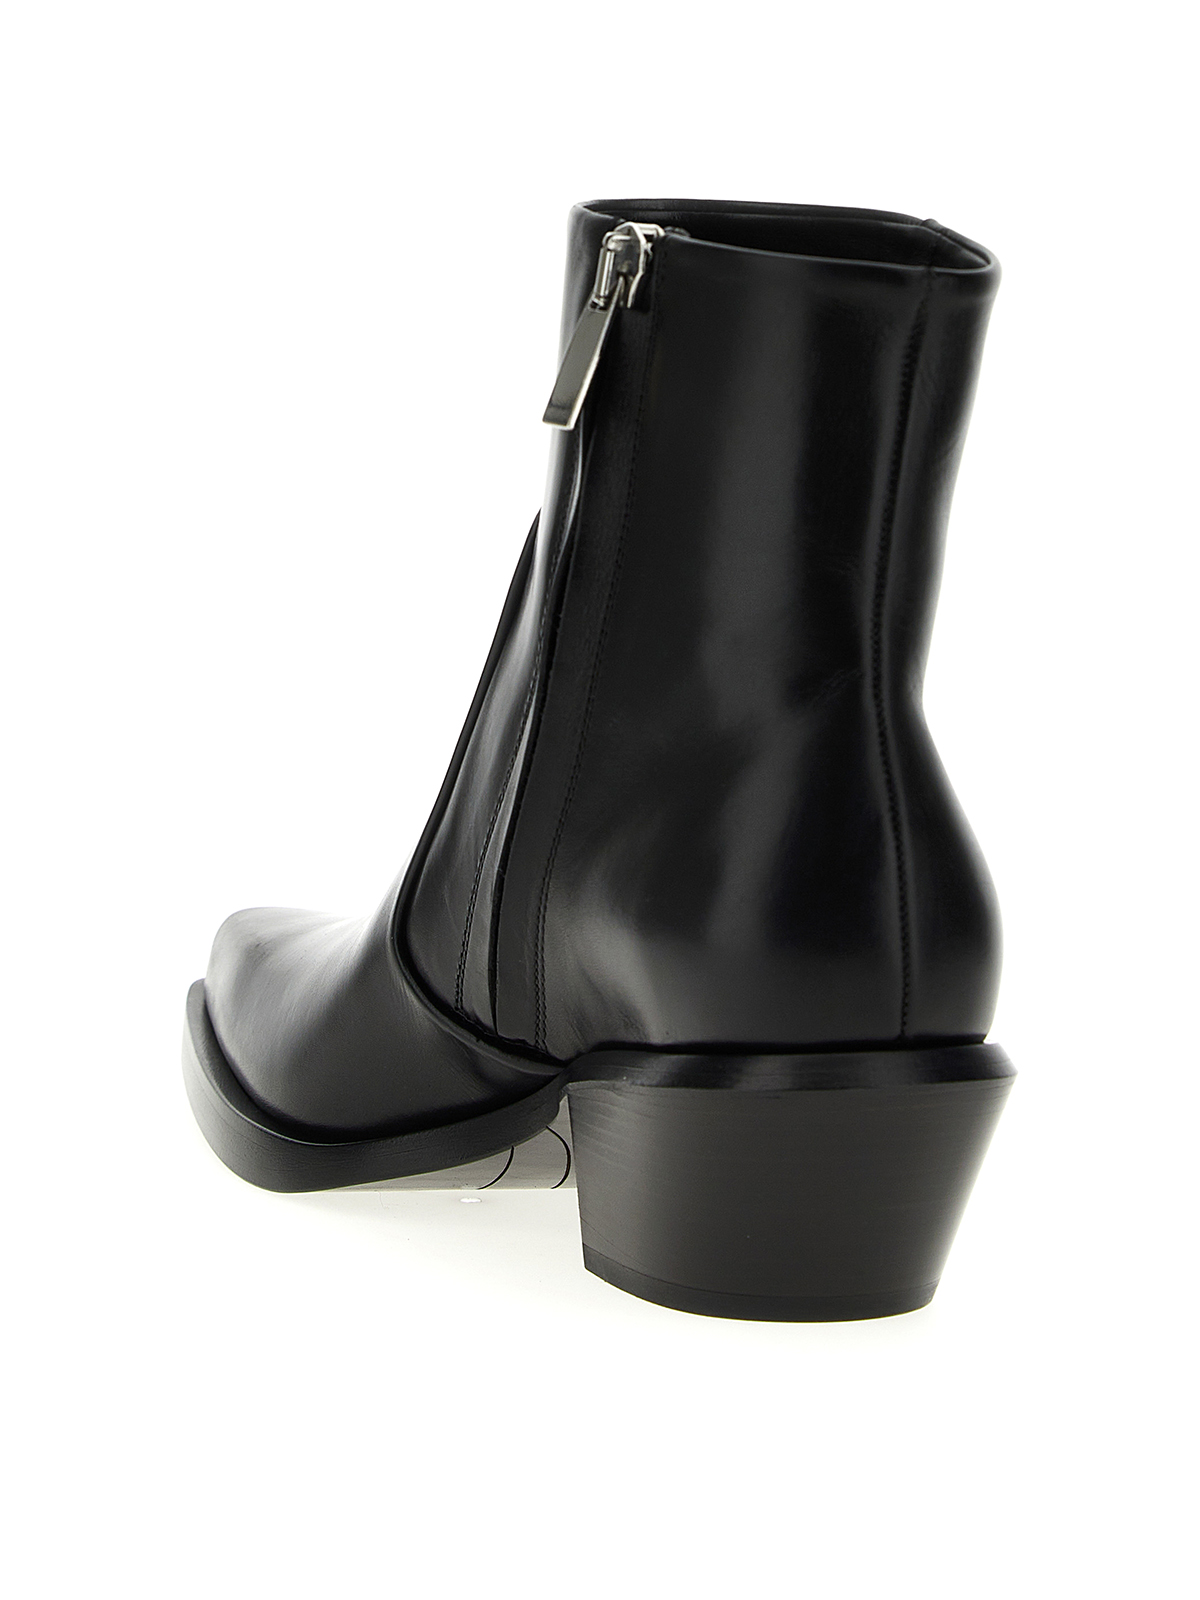 Off-White - Men's Ankle boots - Black - OMID018S23LEA0011010